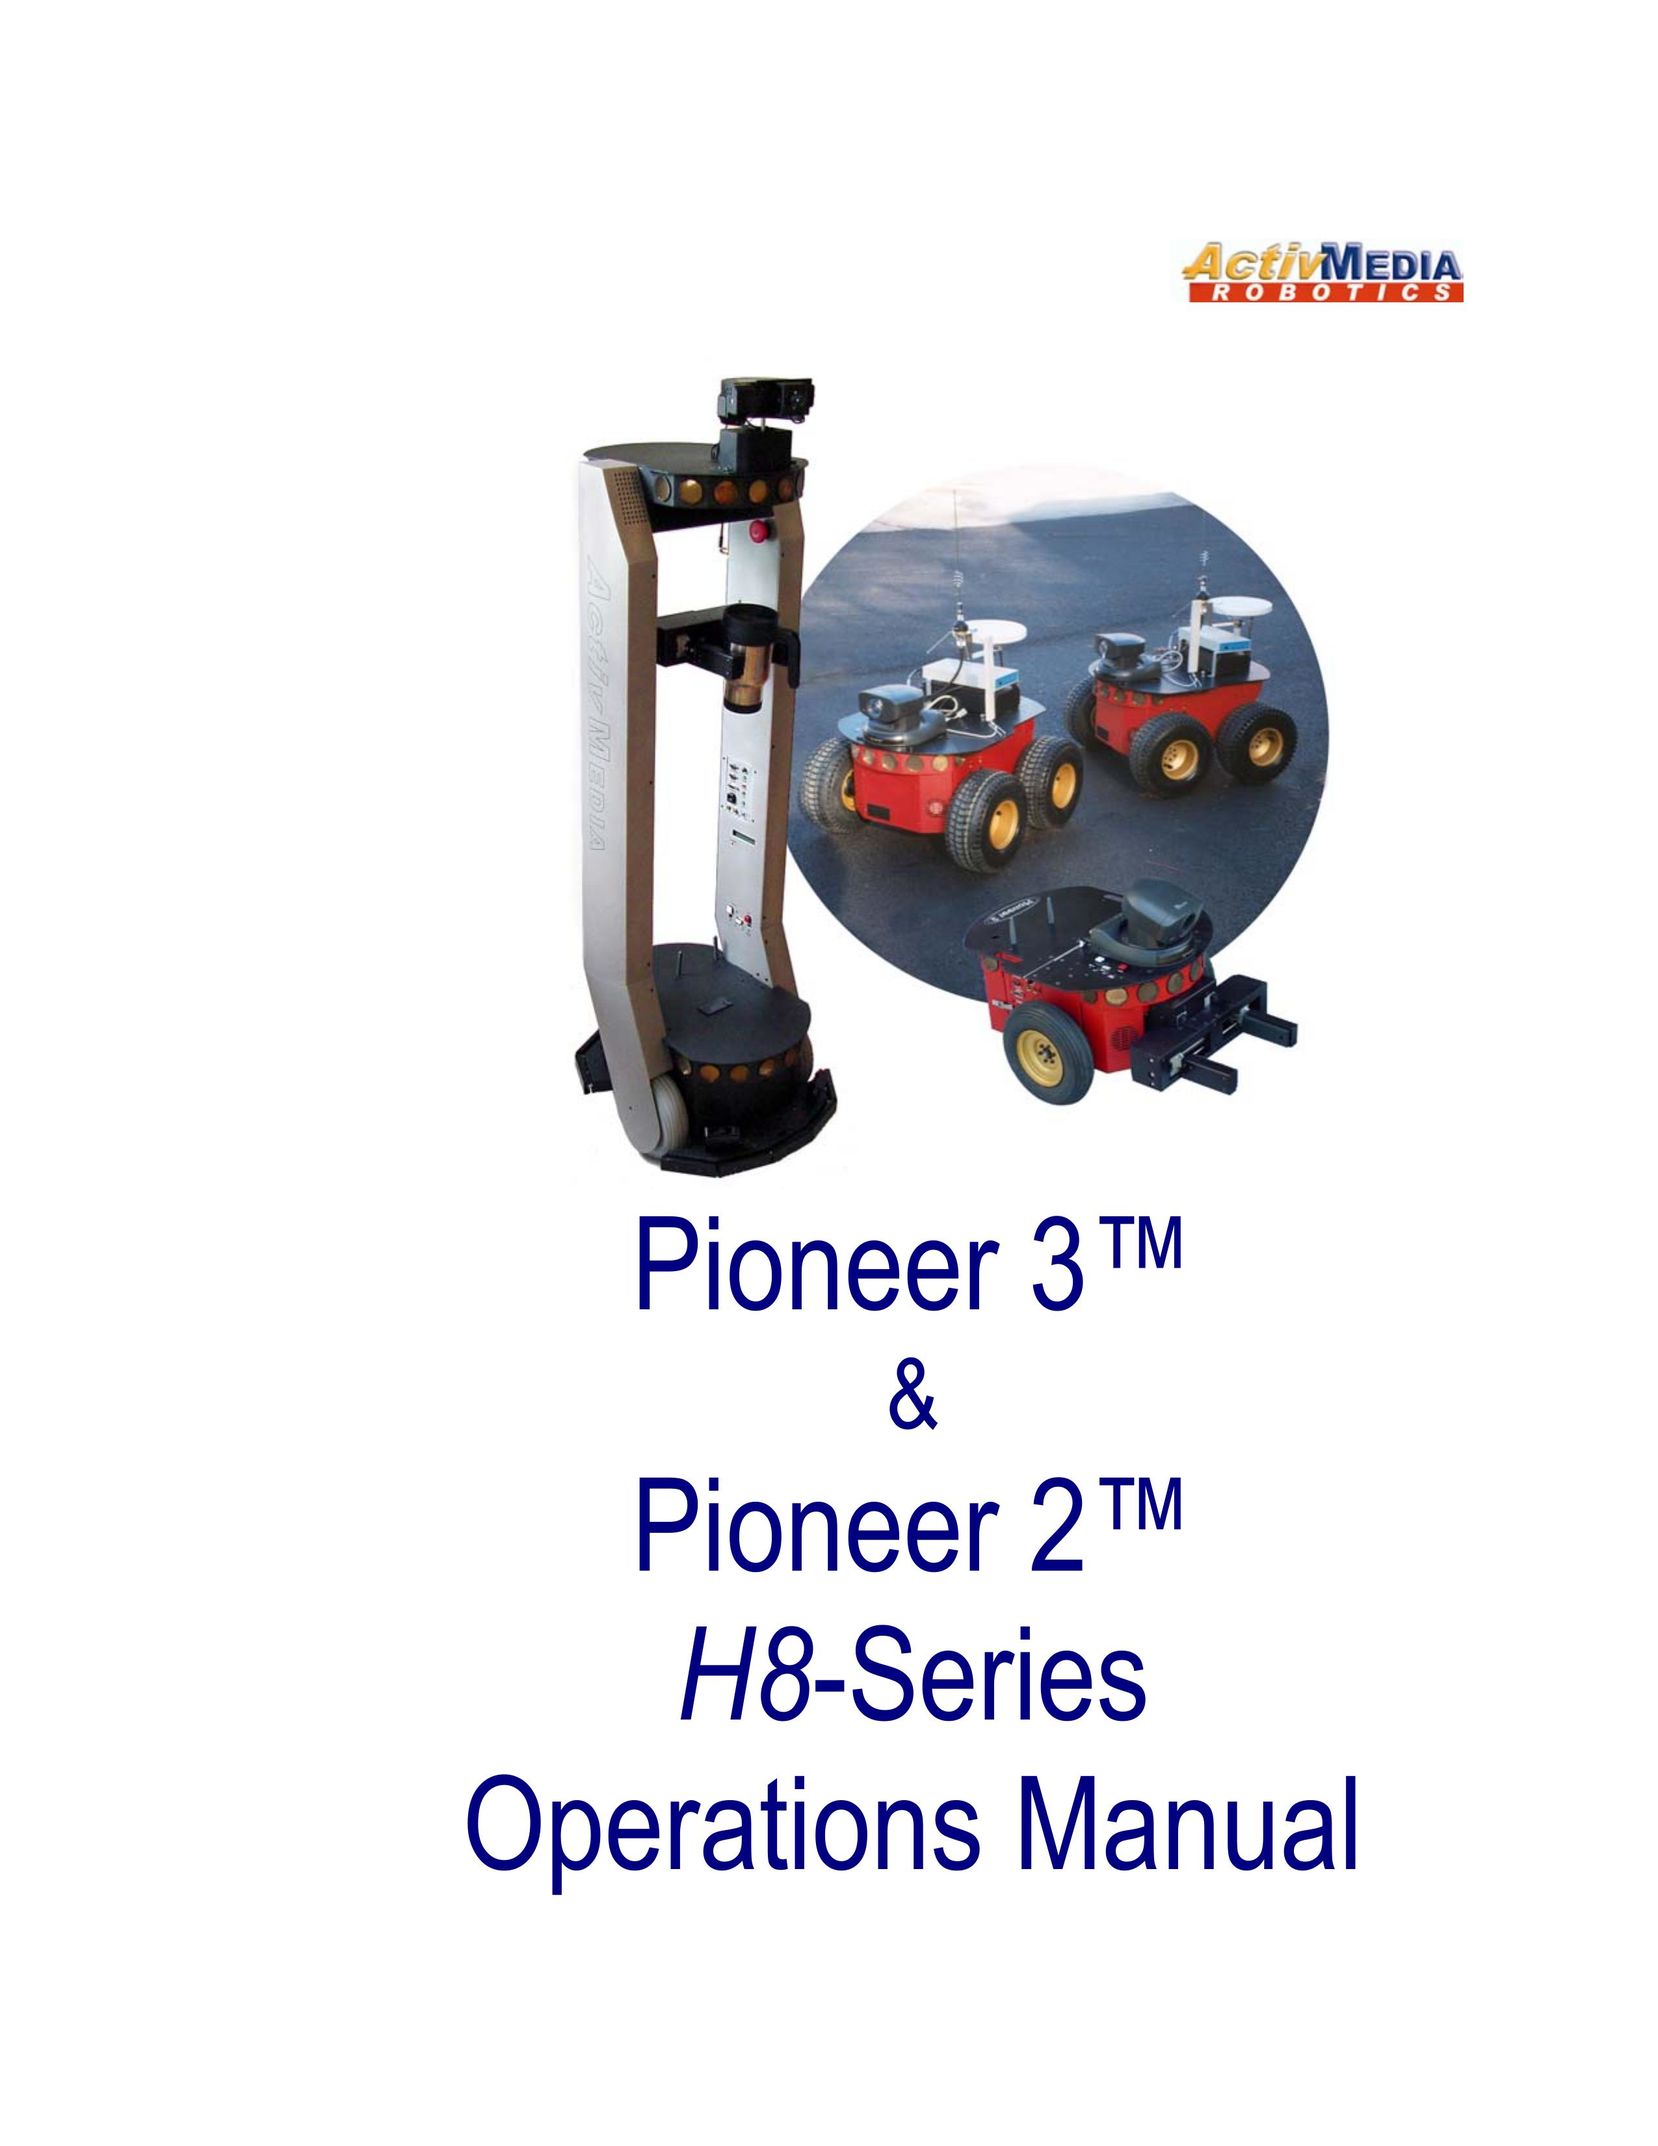 Pioneer 3TM Robotics User Manual